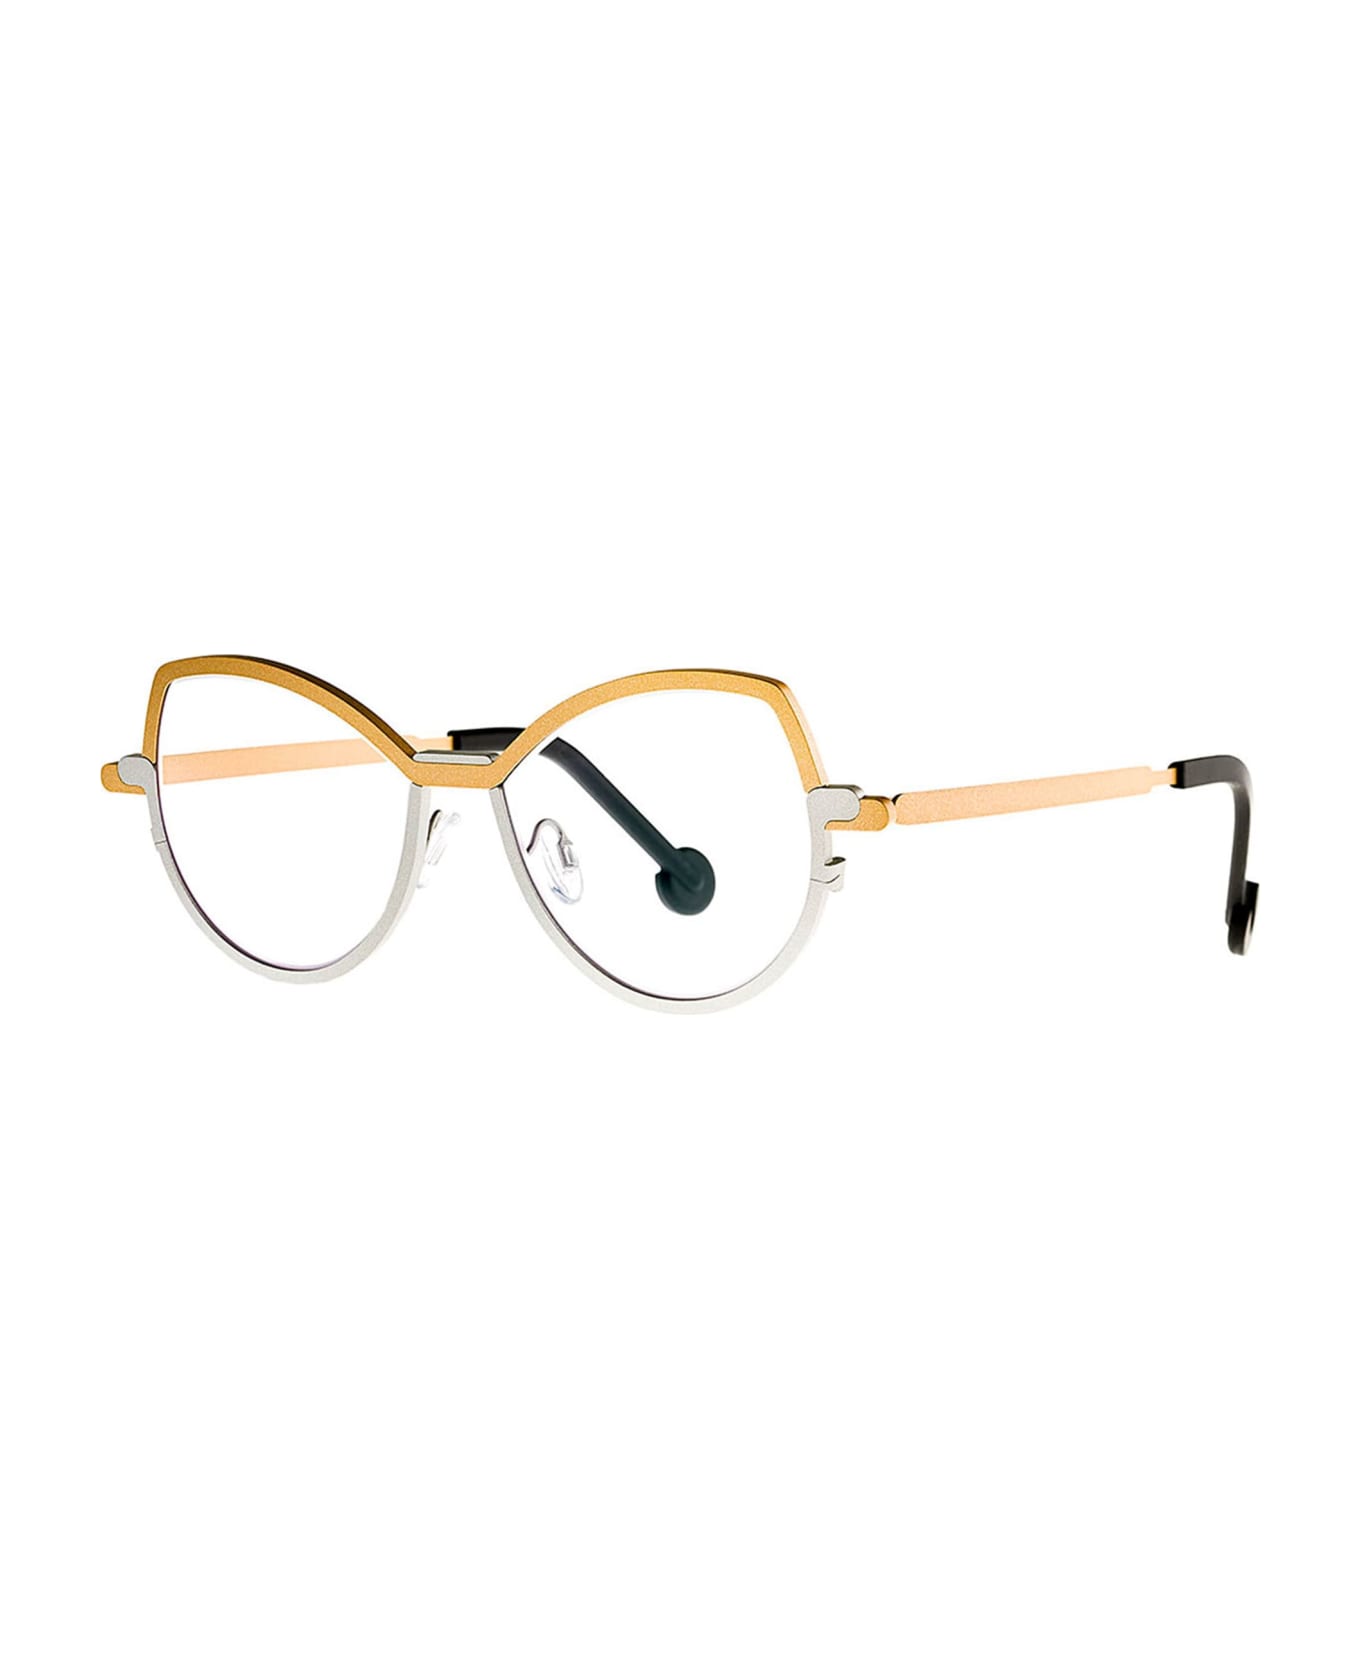 Theo Eyewear Strip - 319 Rx Glasses - gold/silver